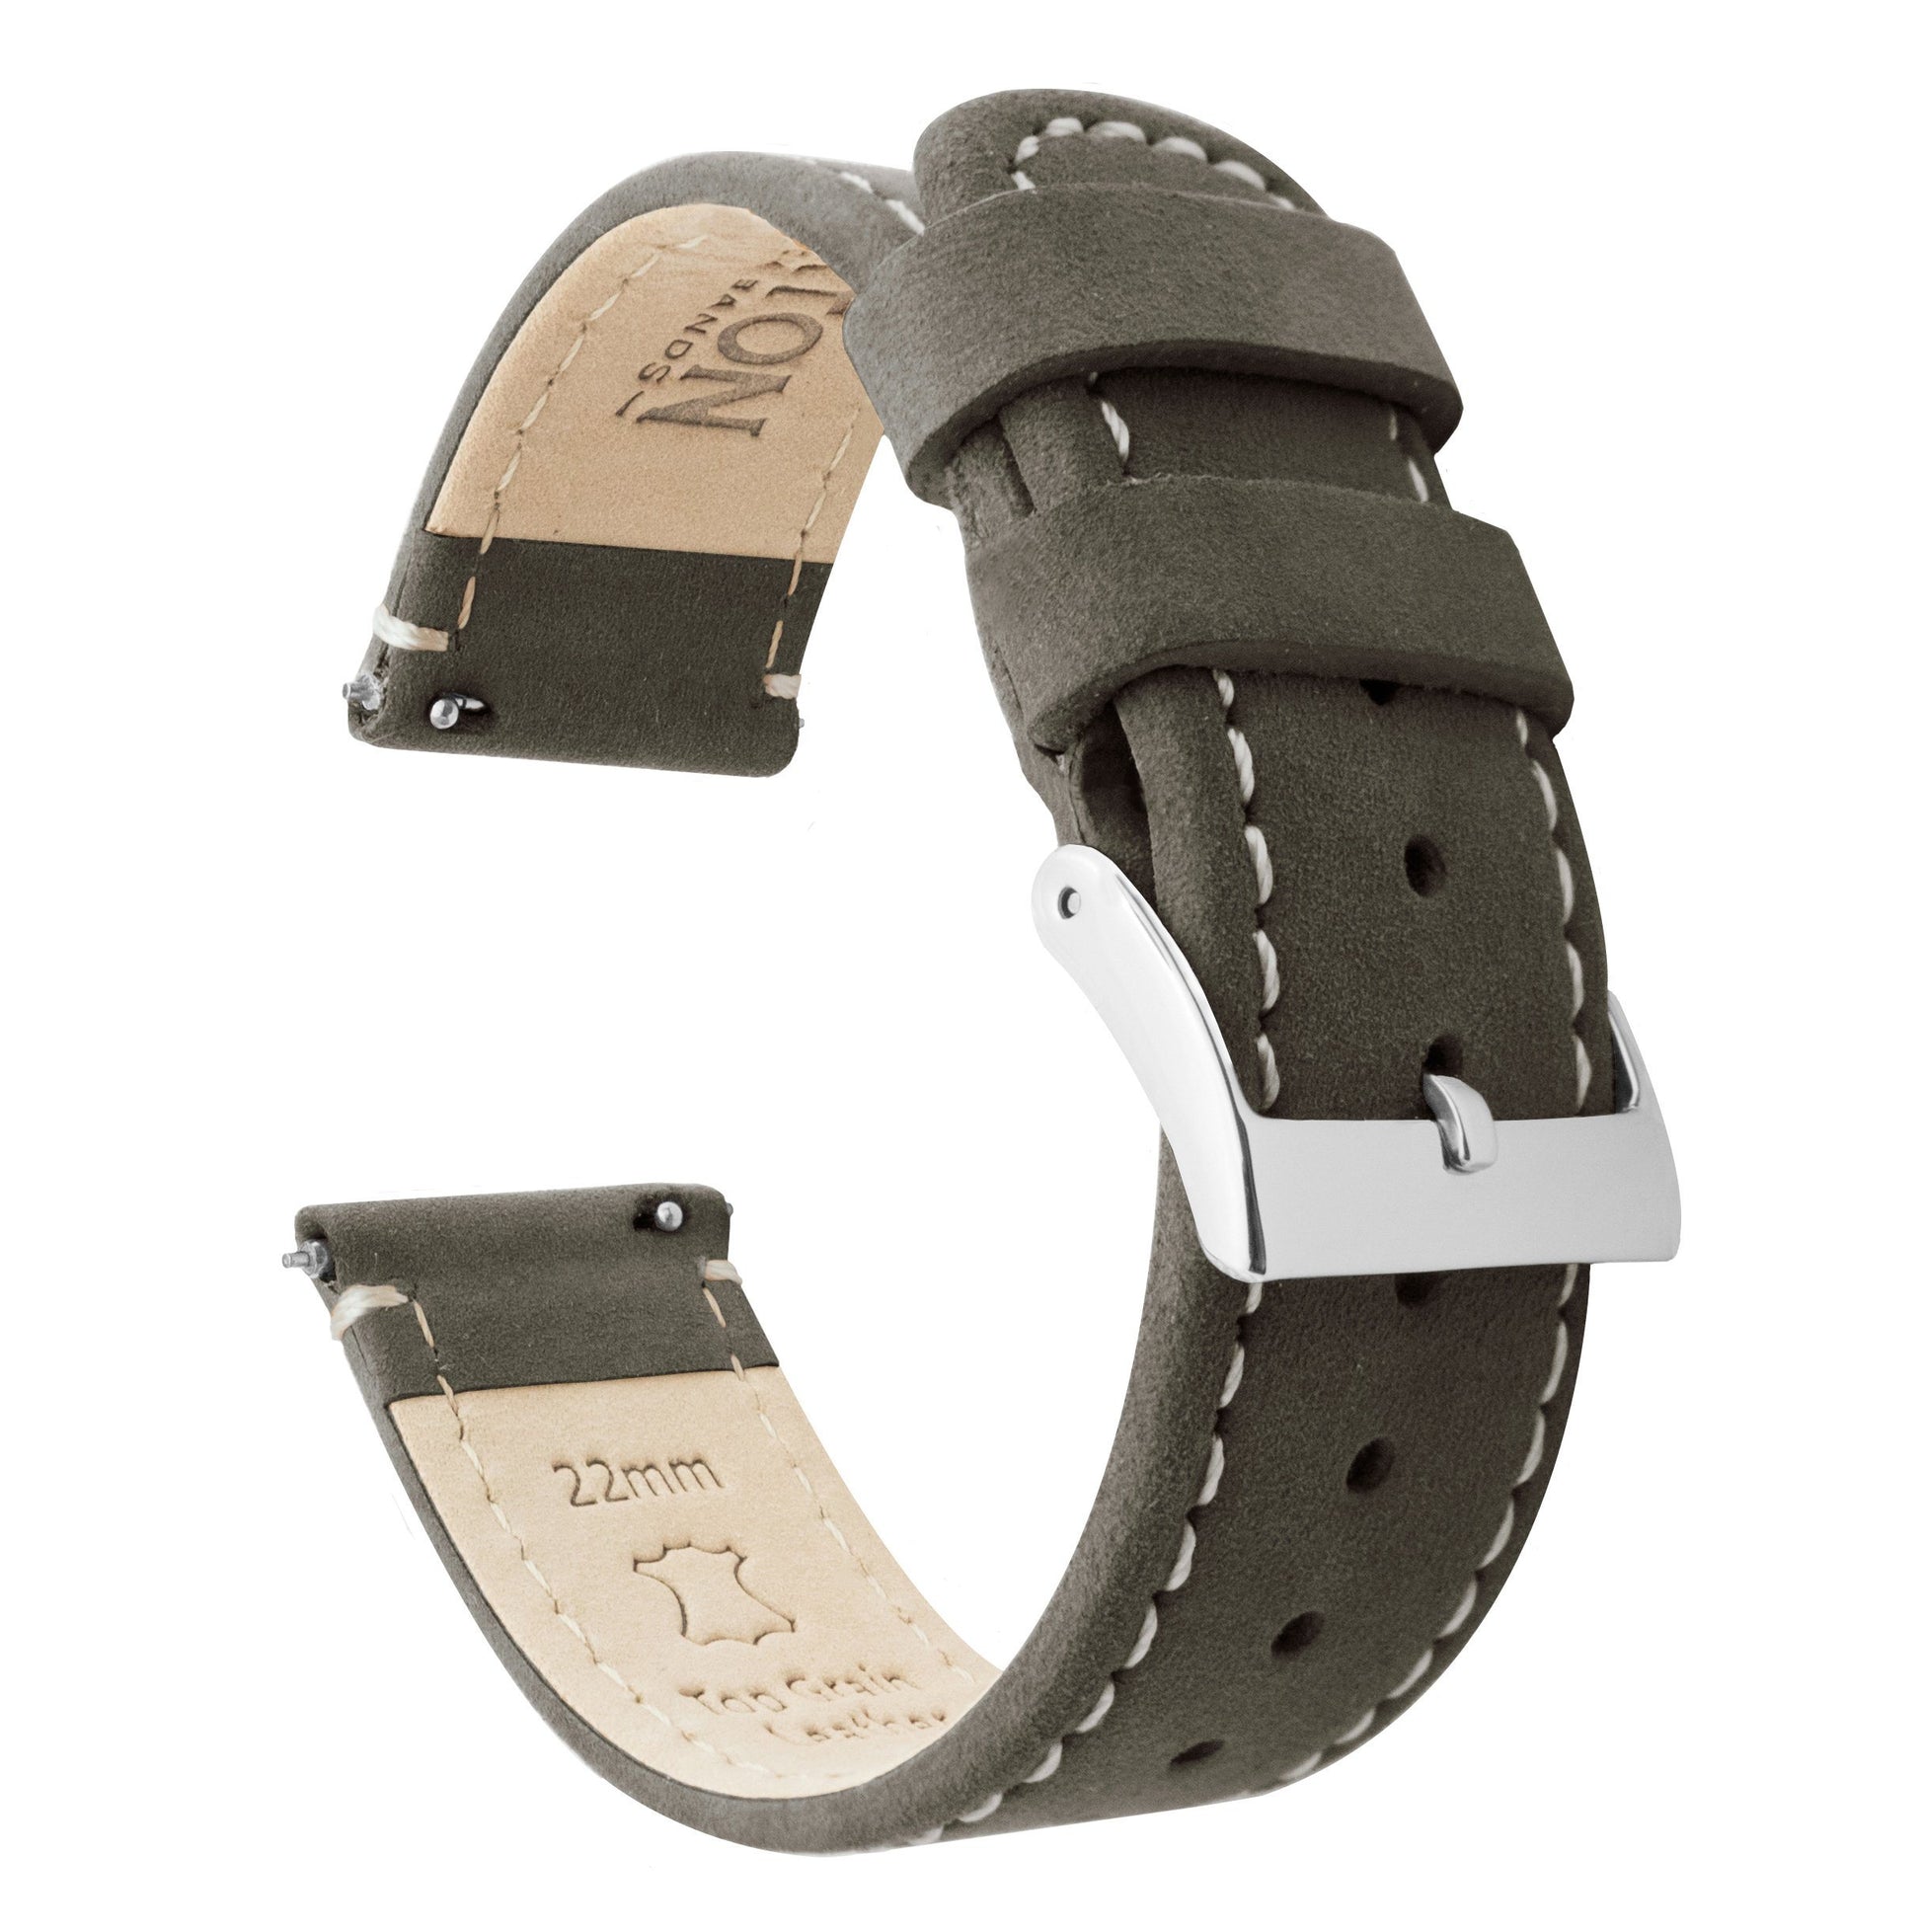 Samsung Galaxy Watch Active 2 | Espresso Brown Leather & Linen White Stitching - Barton Watch Bands